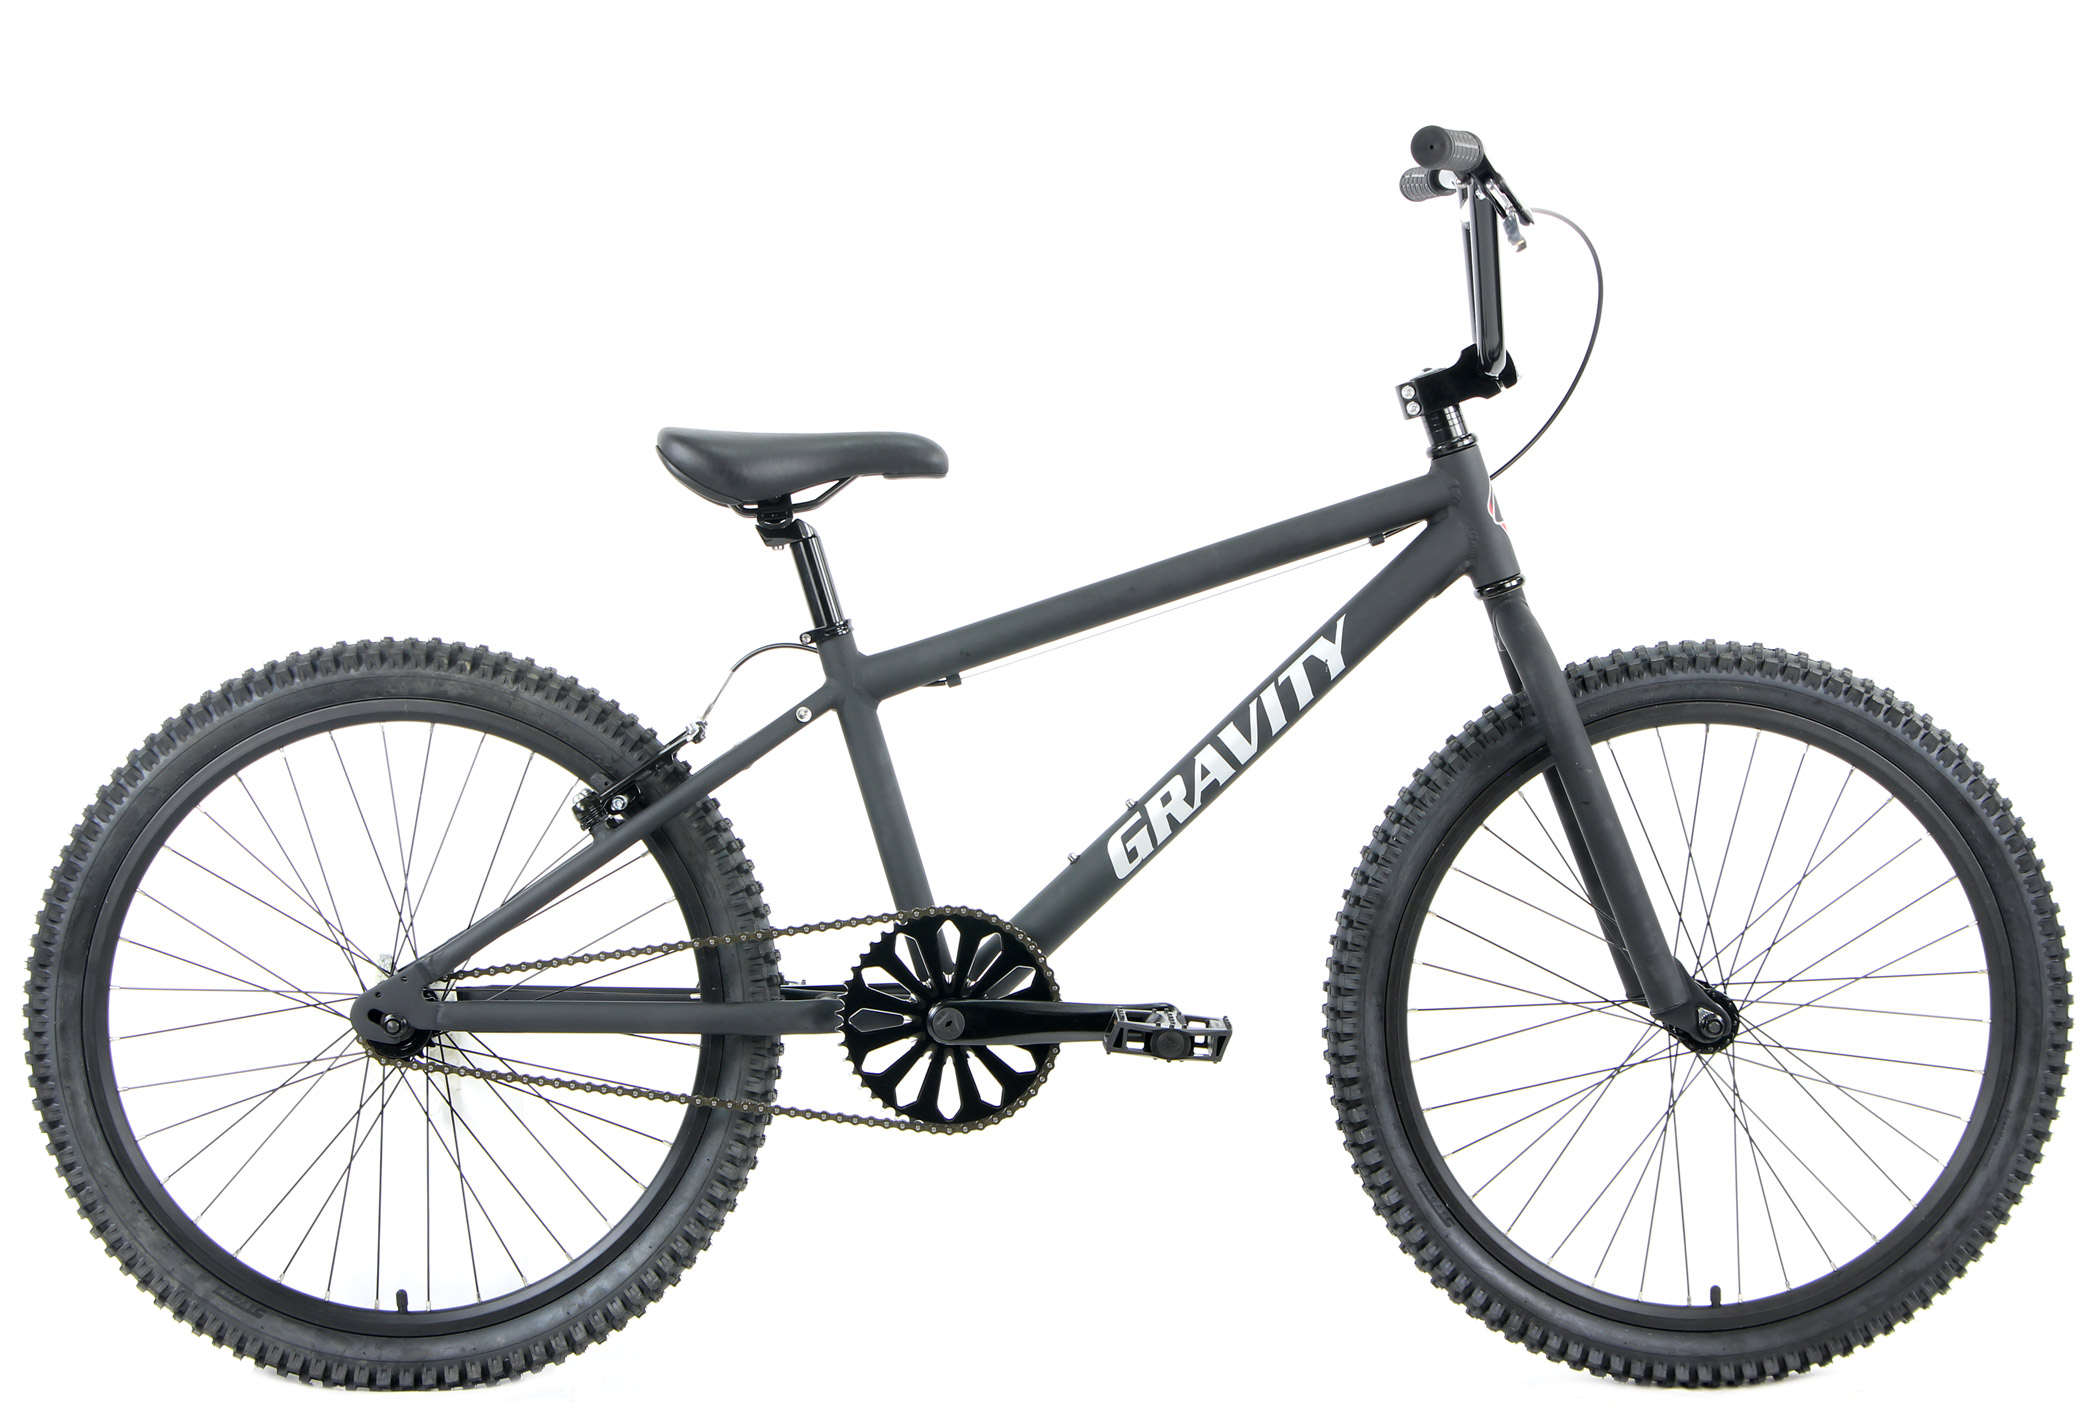  Gravity Superfast Big FAT 20 or 24INCH Tires! Aluminum ADULT SIZE BMX w/ Powerful Rear V Brake Bike Image